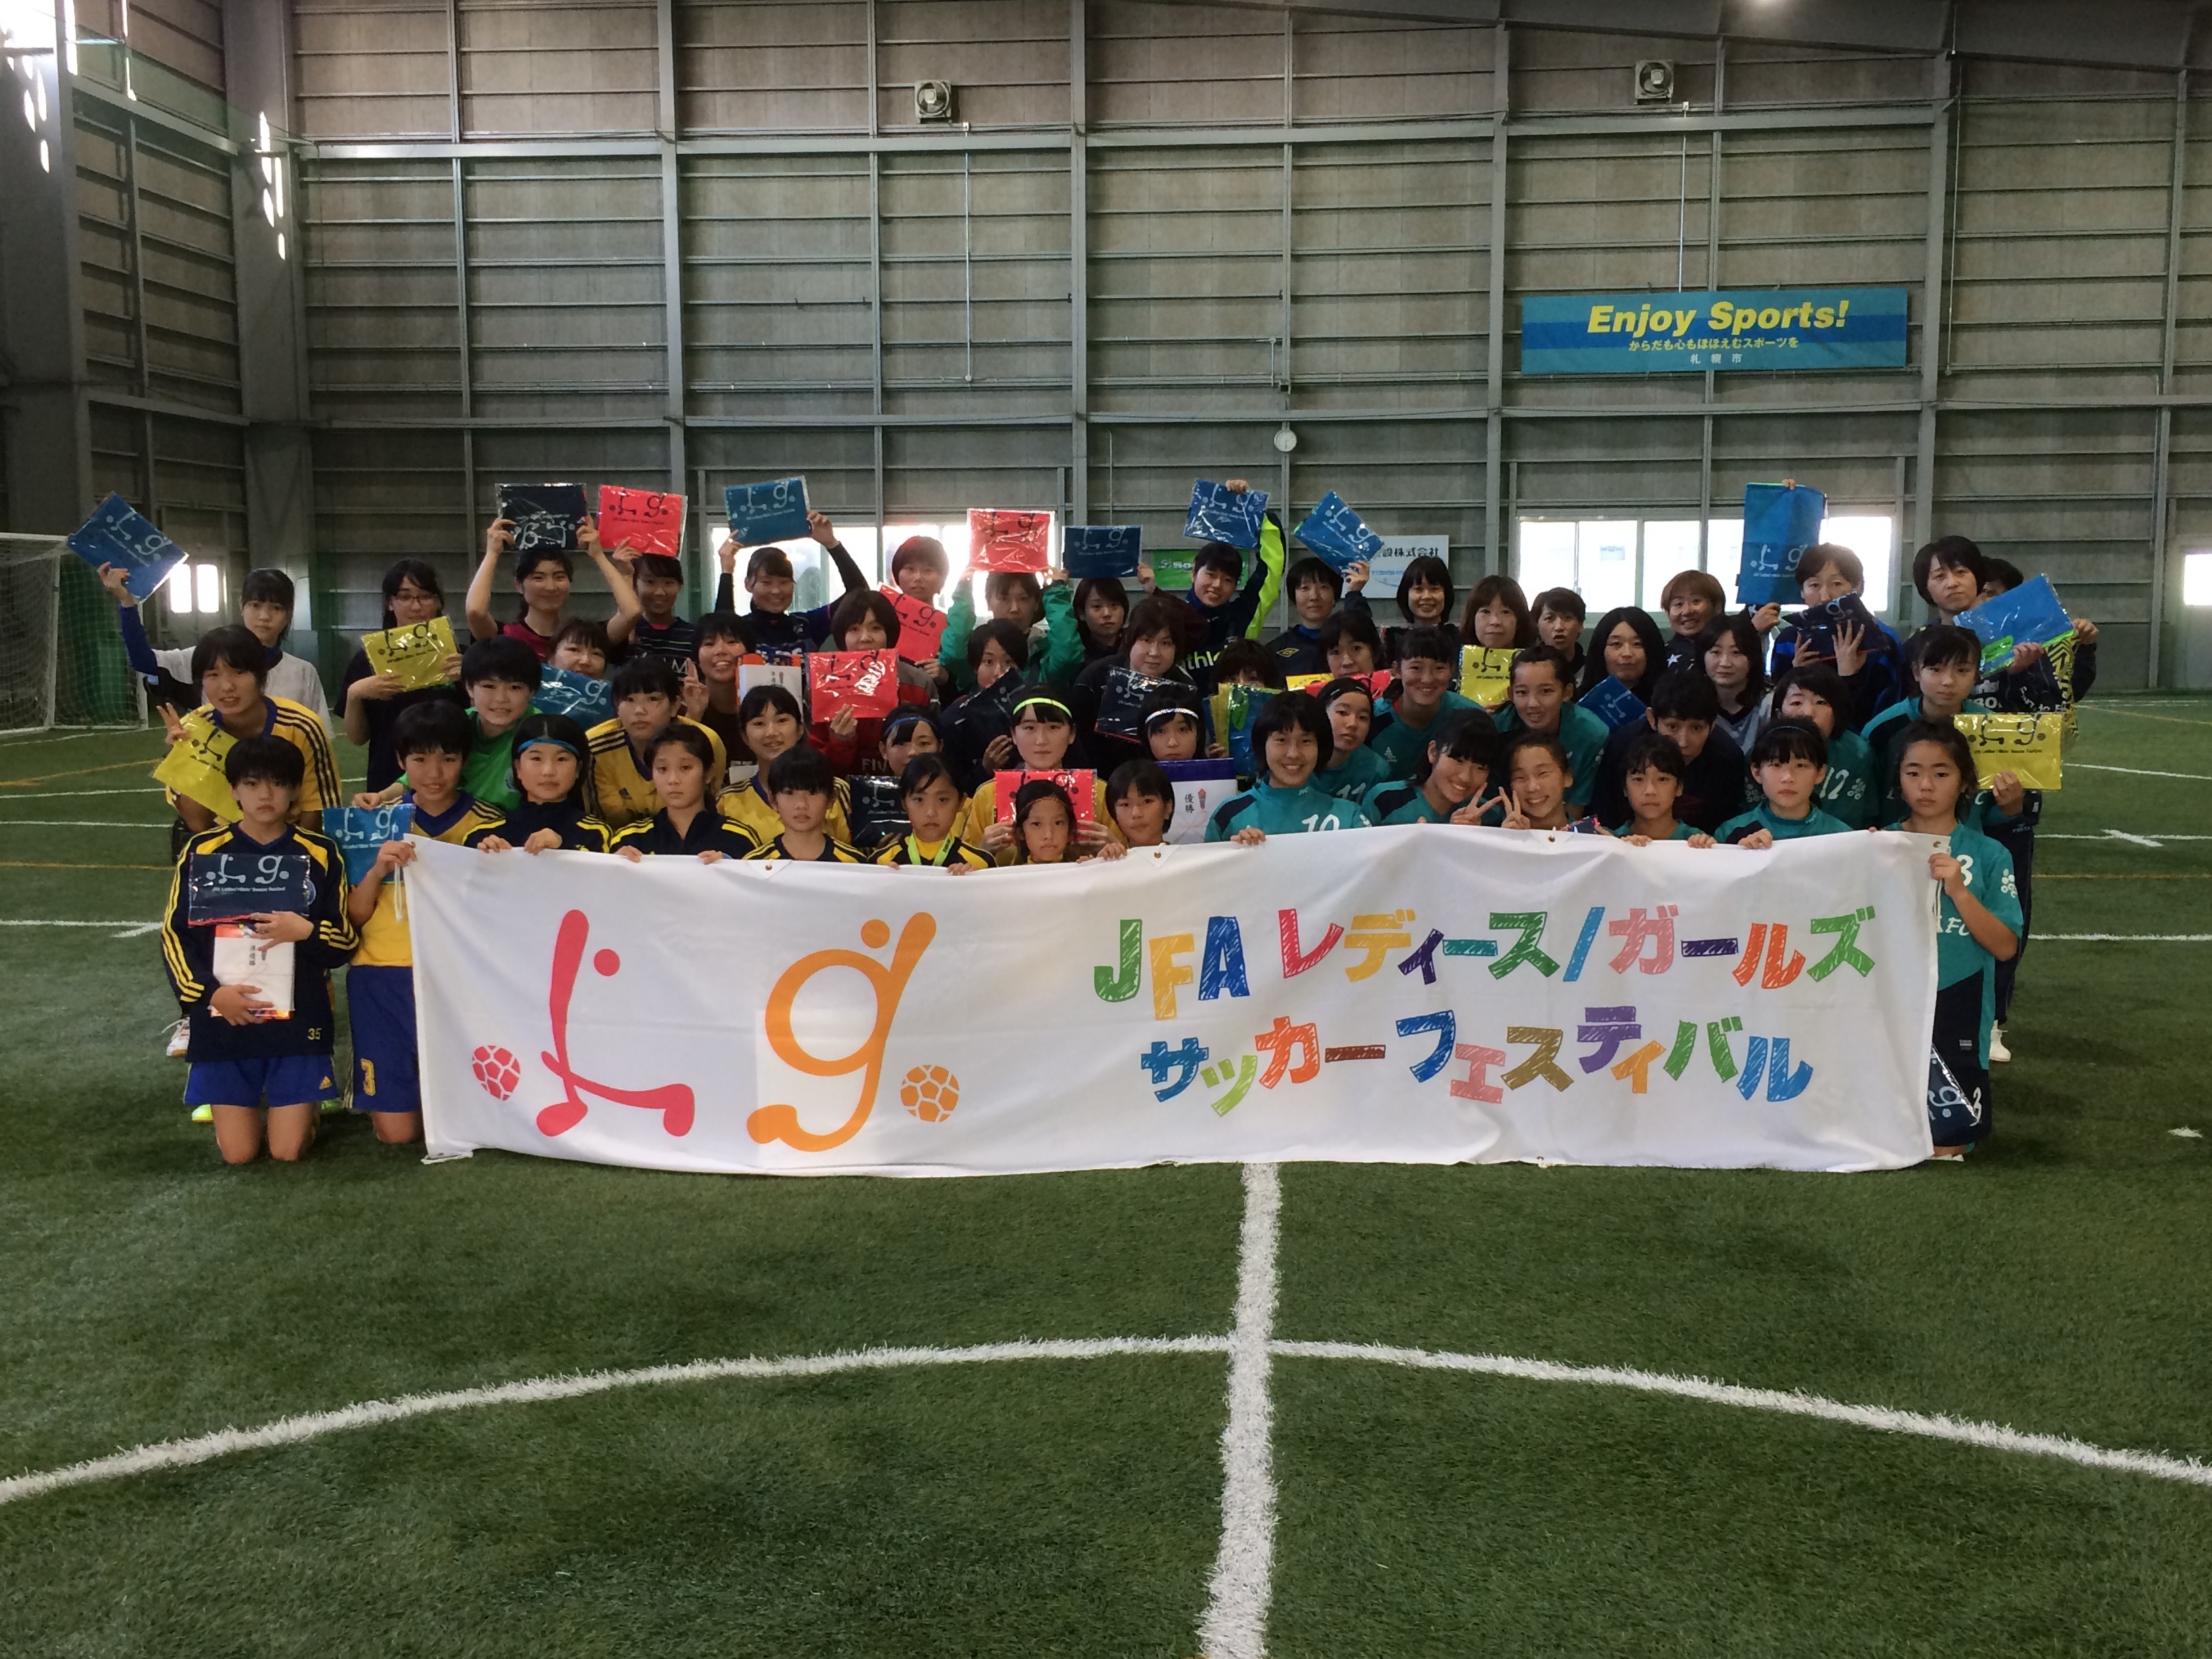 JFAレディース／ガールズサッカーフェスティバル 北海道札幌市の札幌サッカーアミューズメントパークに70人が参加！